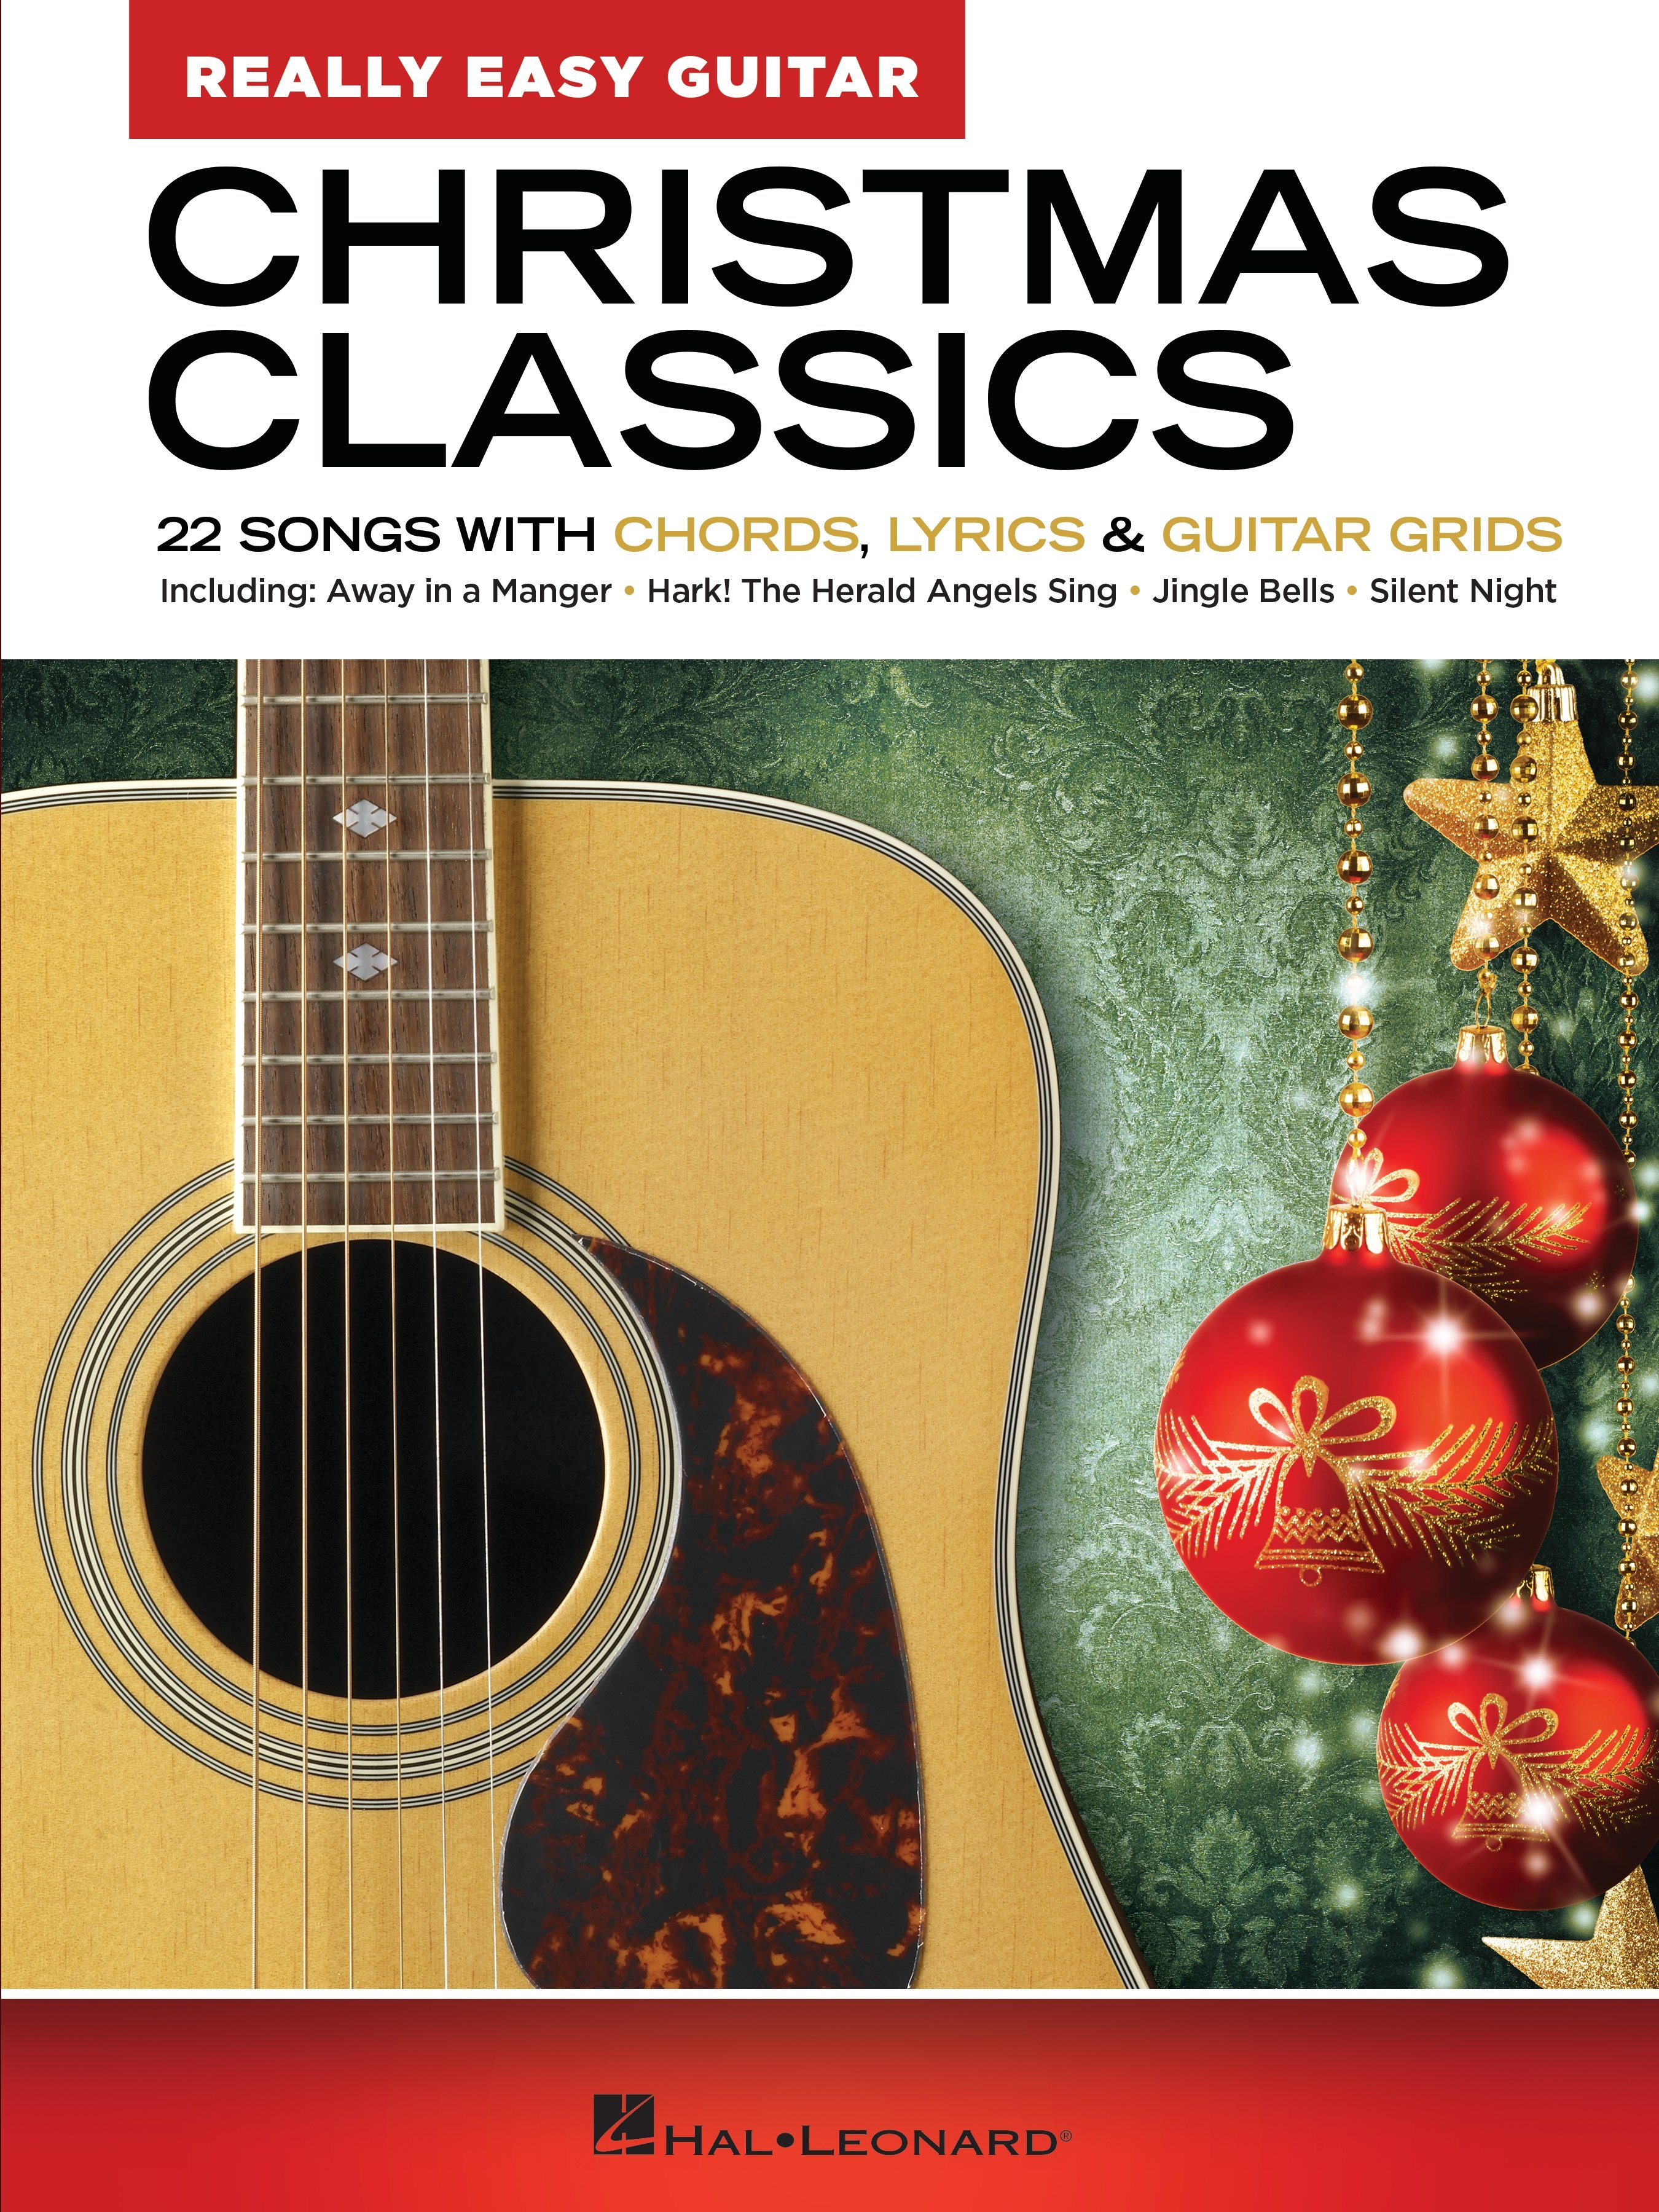 Really Easy Guitar Christmas Classics